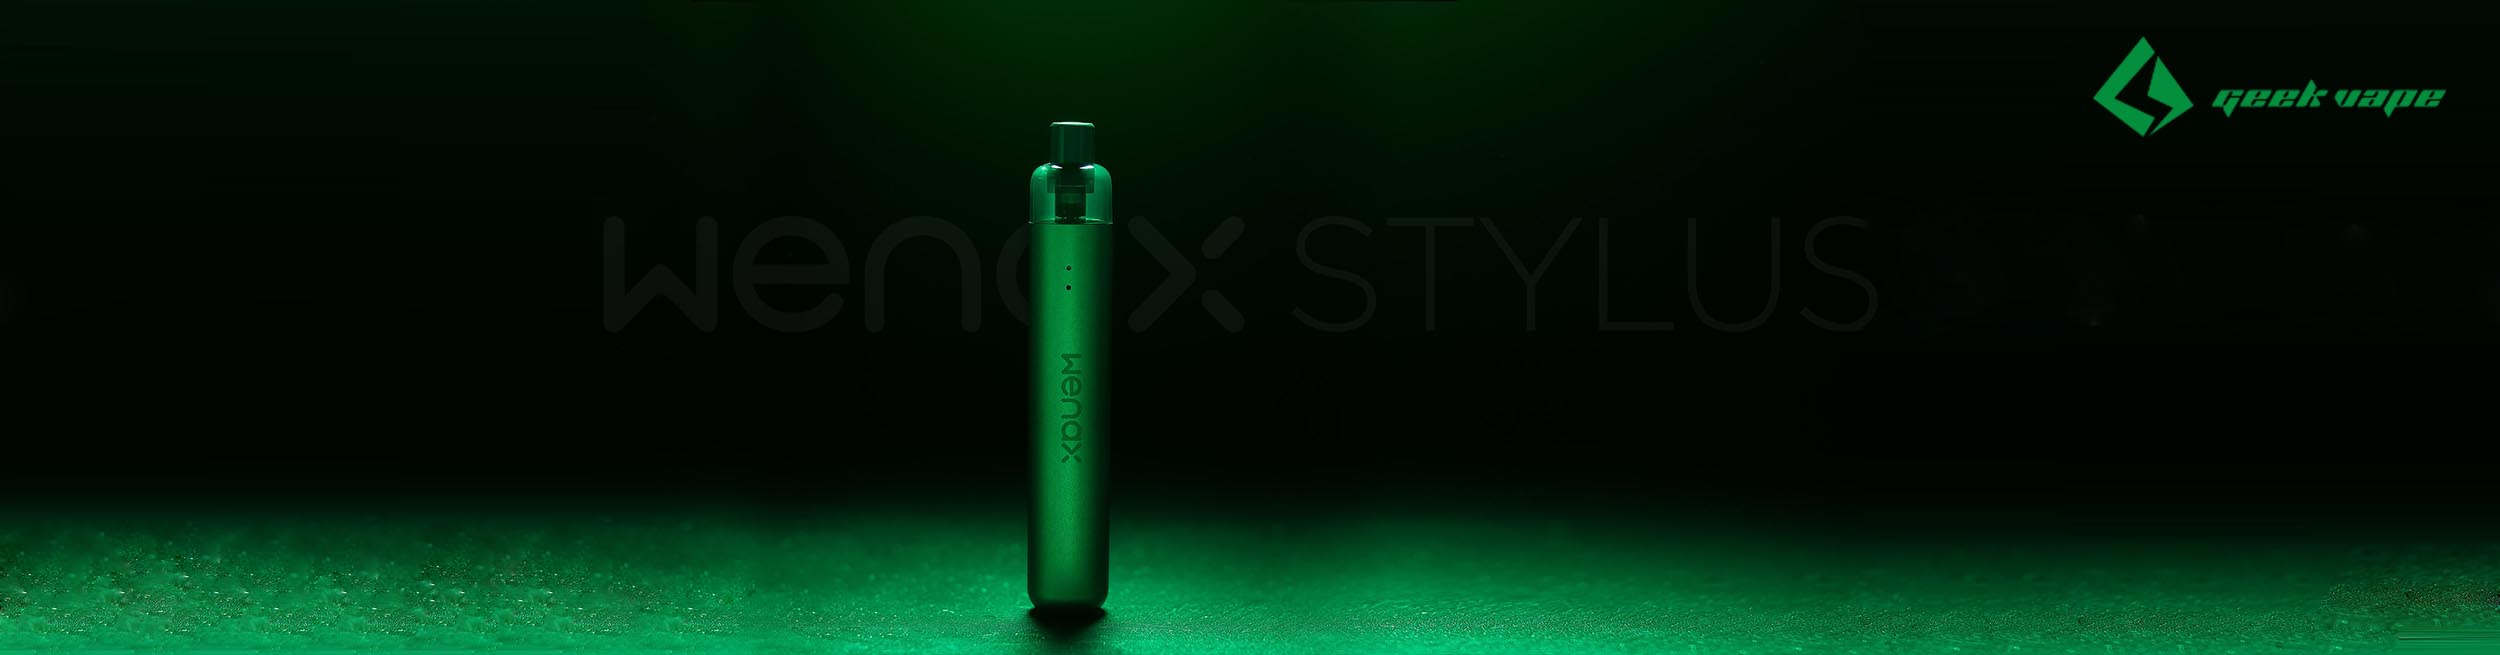 Wenax Stylus e-zigarette